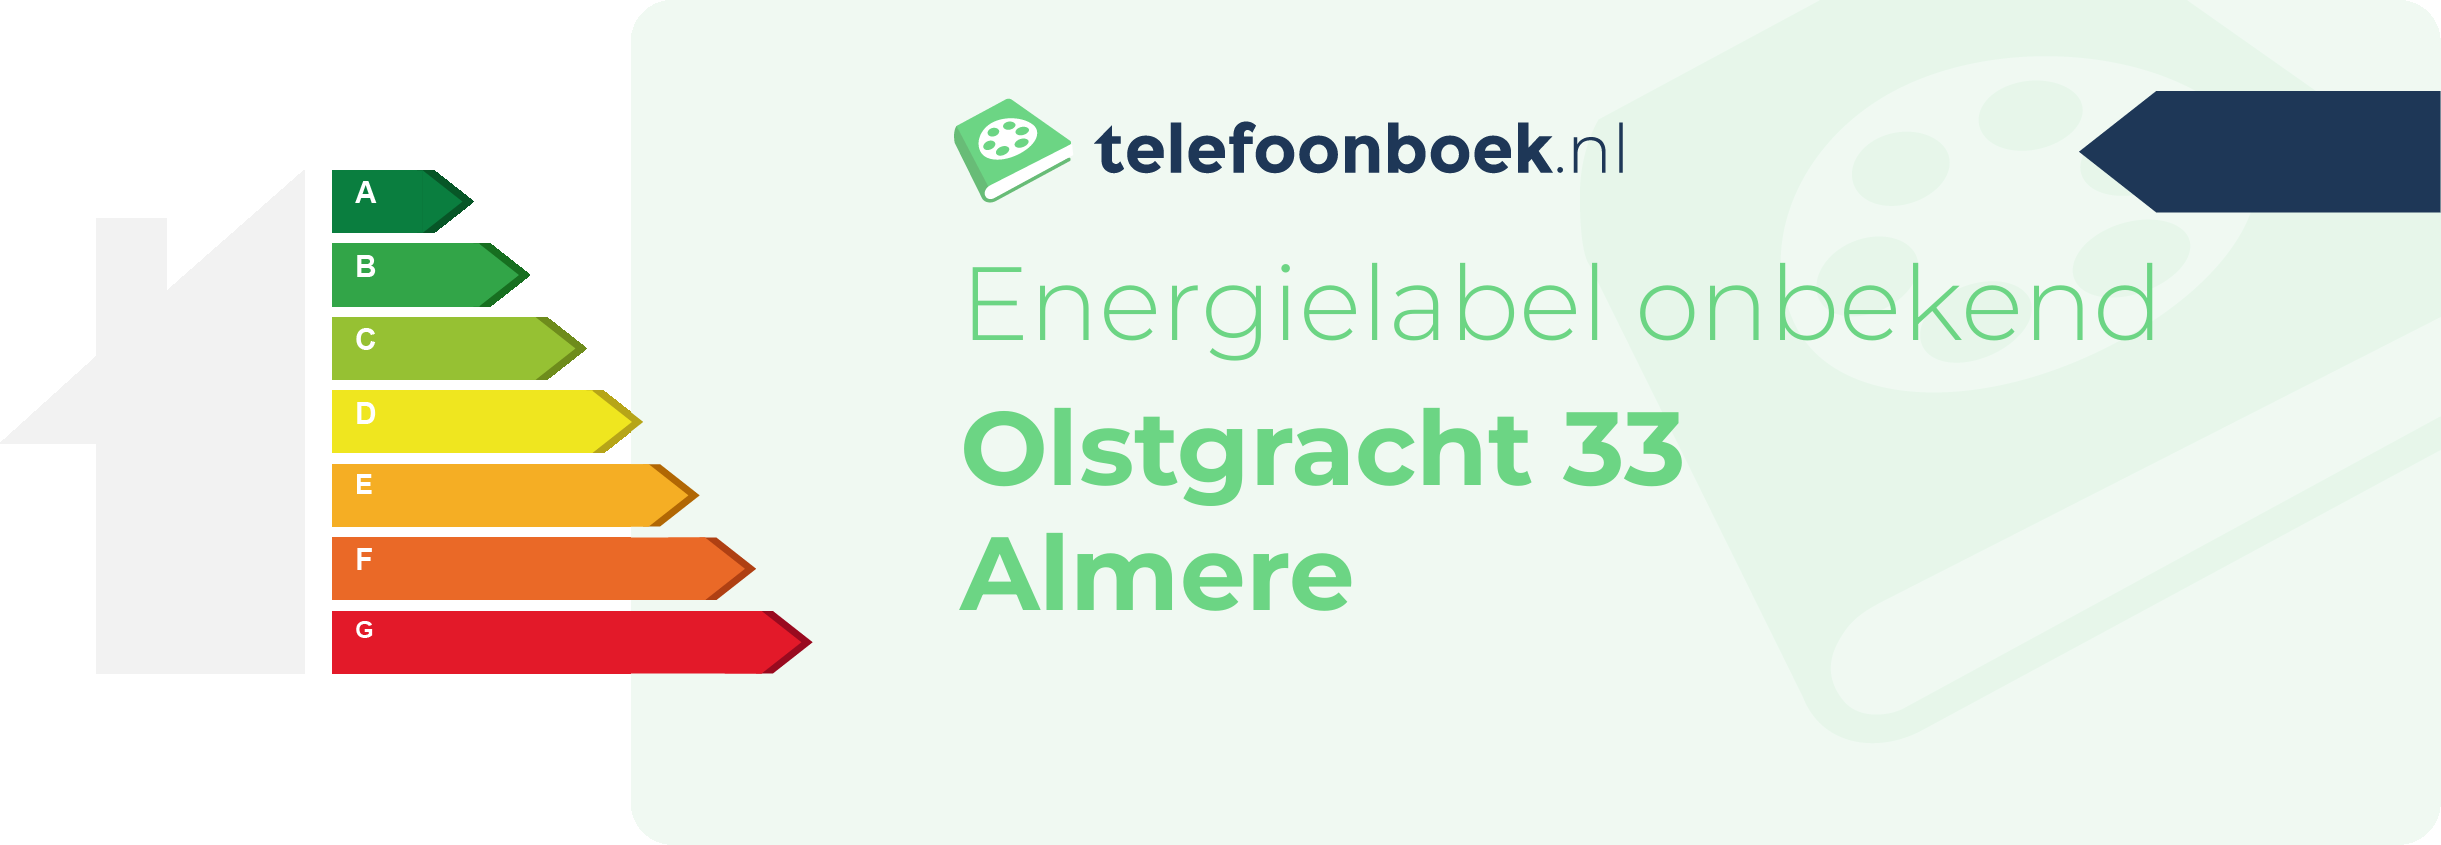 Energielabel Olstgracht 33 Almere